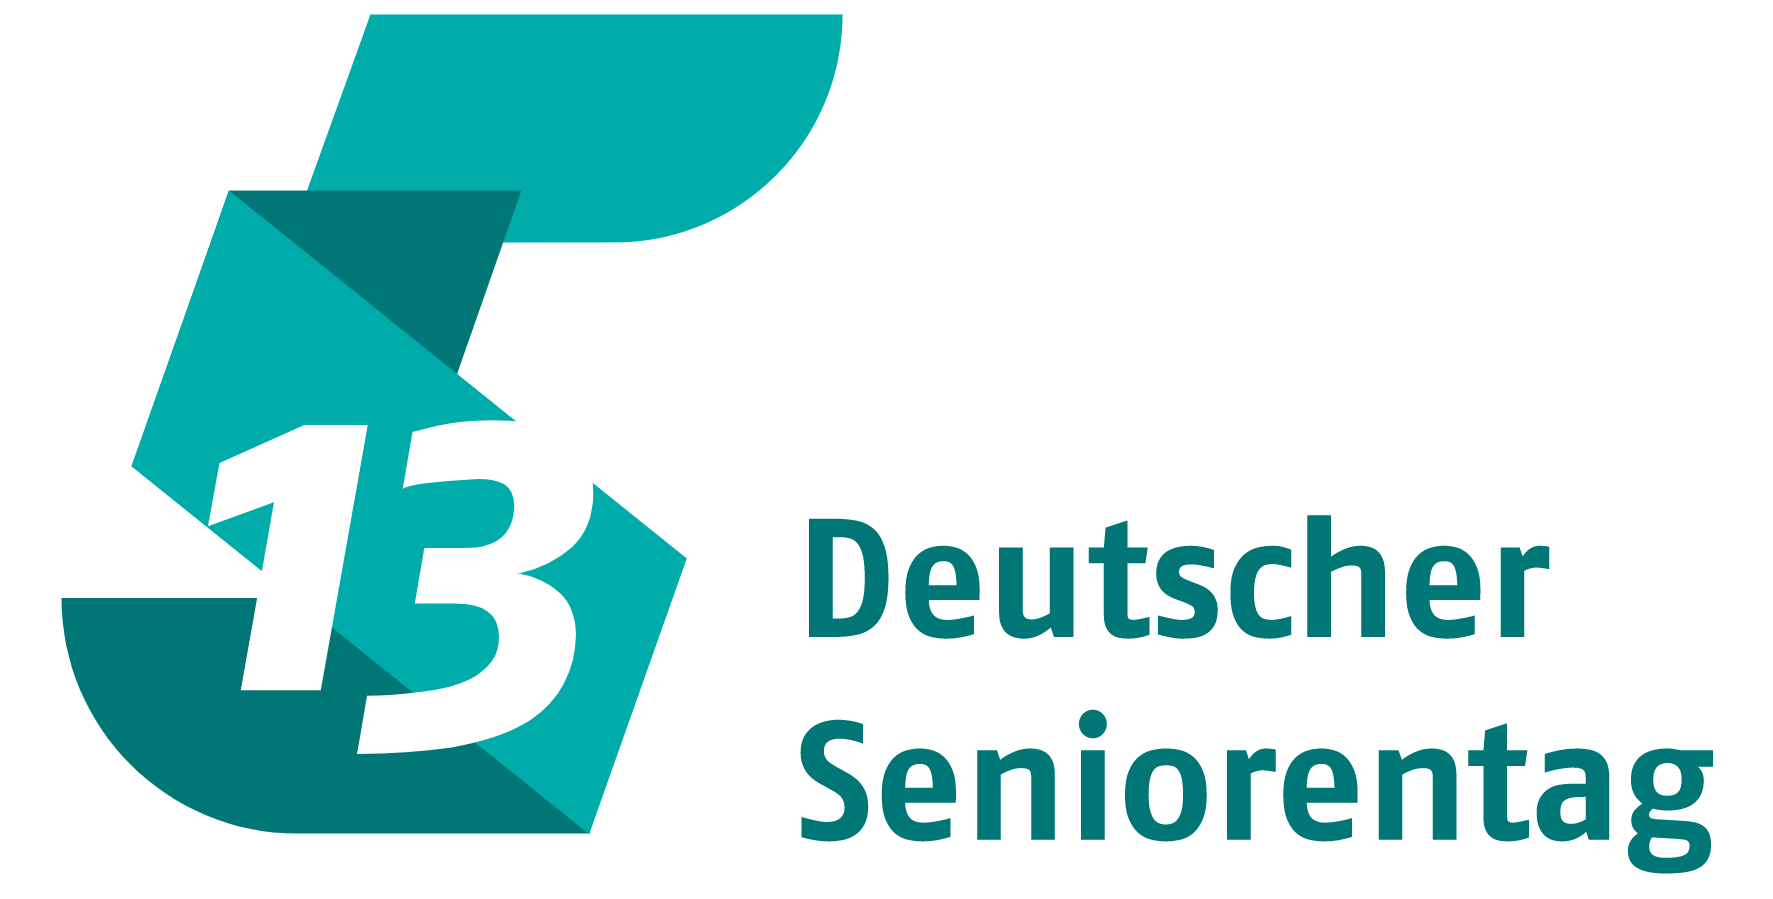 Dt_SeniorenTag-logo